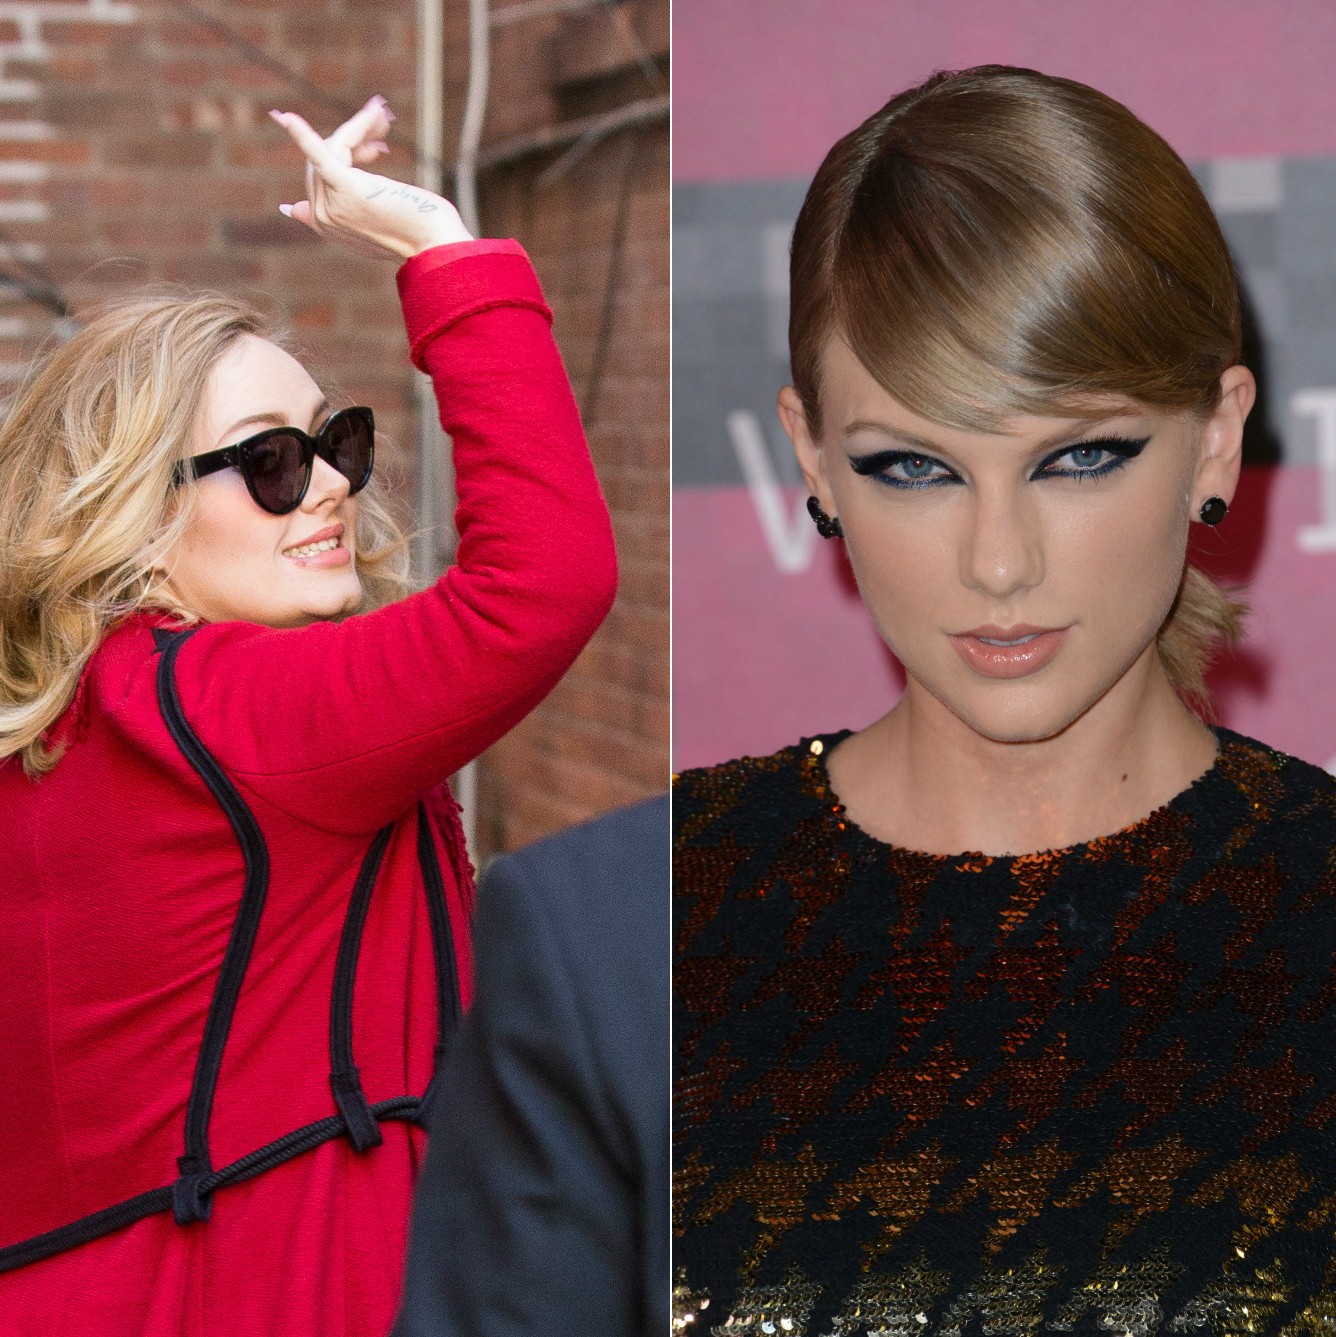 OMG: E oficial! Taylor Swift e istorie! Adele e ”cel mai vândut artist” din lume!